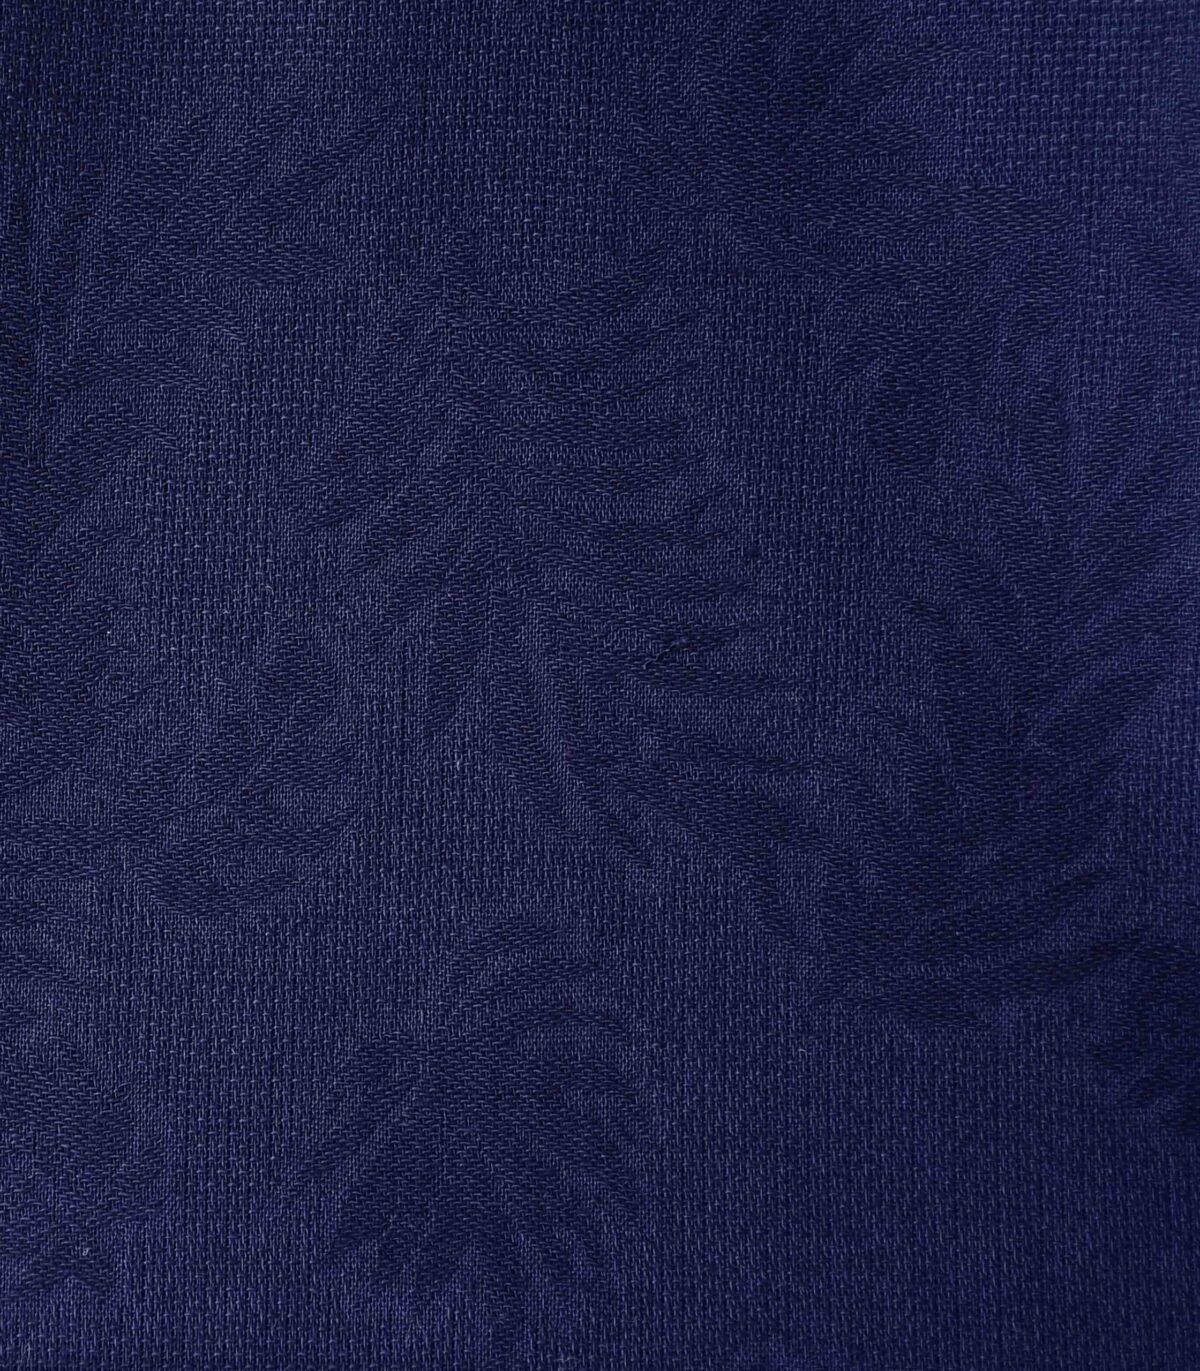 Cotton Navy Color Jacquard Woven Fabric